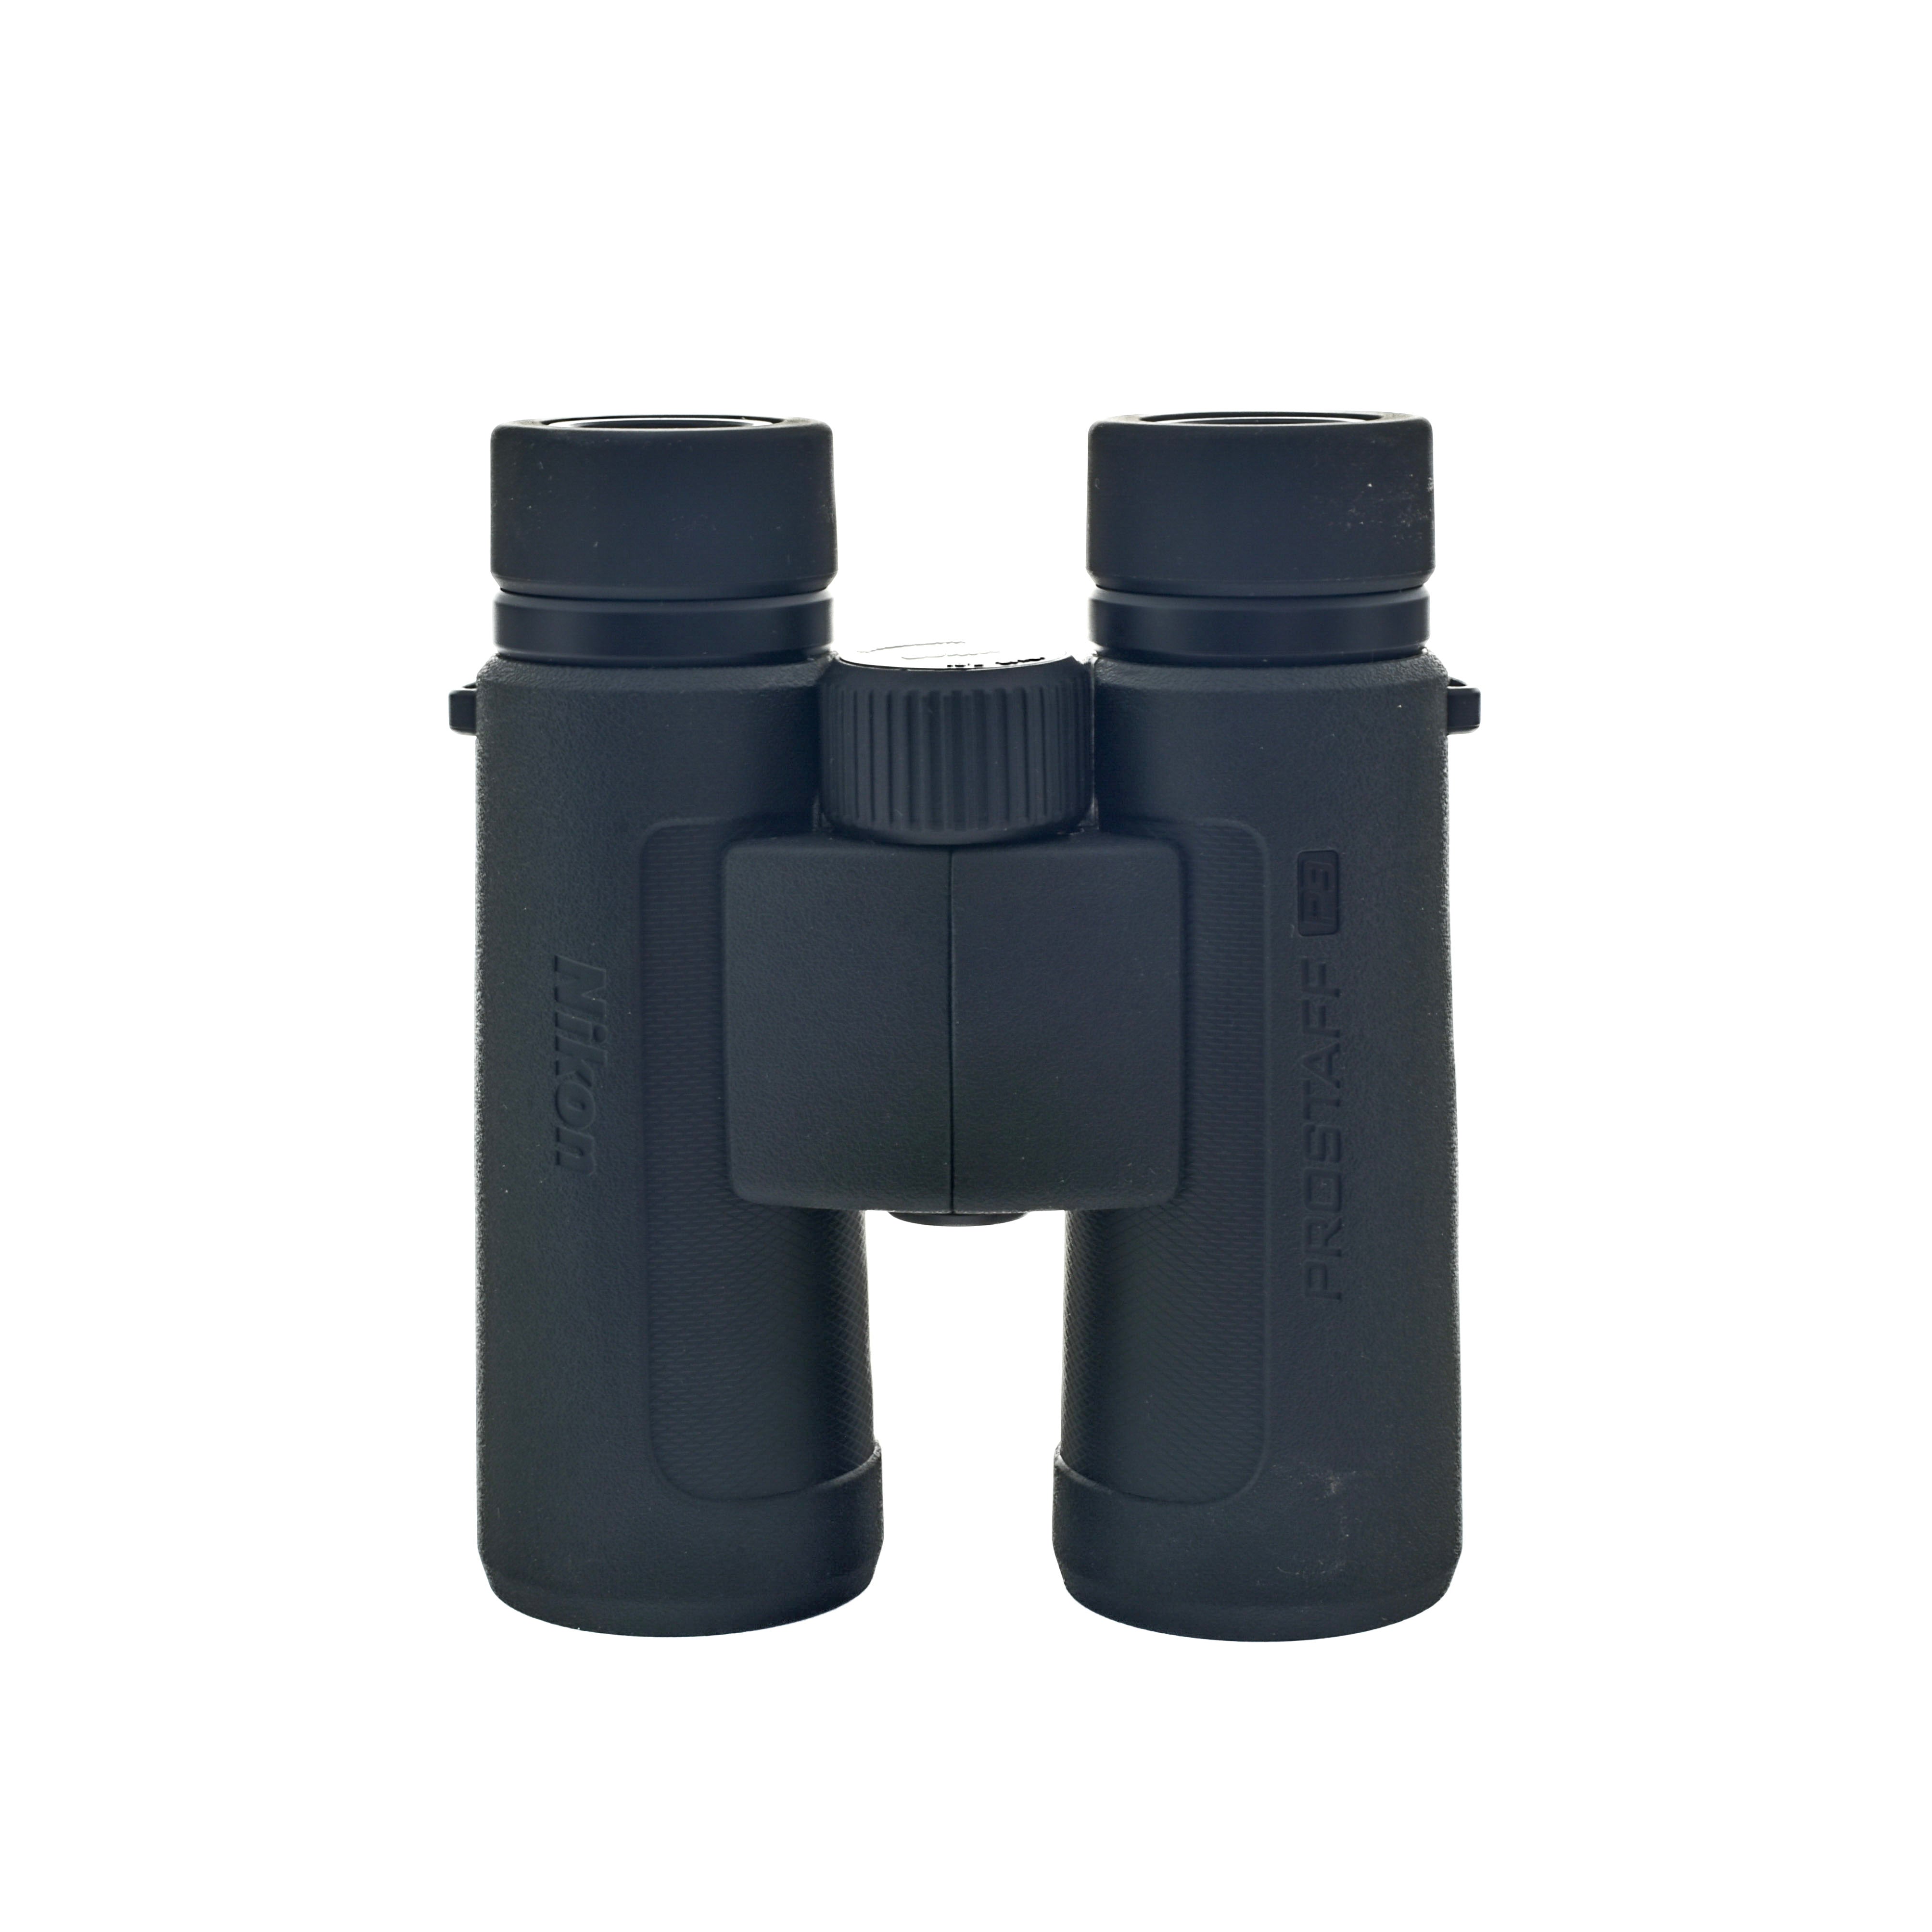 Nikon Prostaff P3 8 x 42 Binoculars (Black)